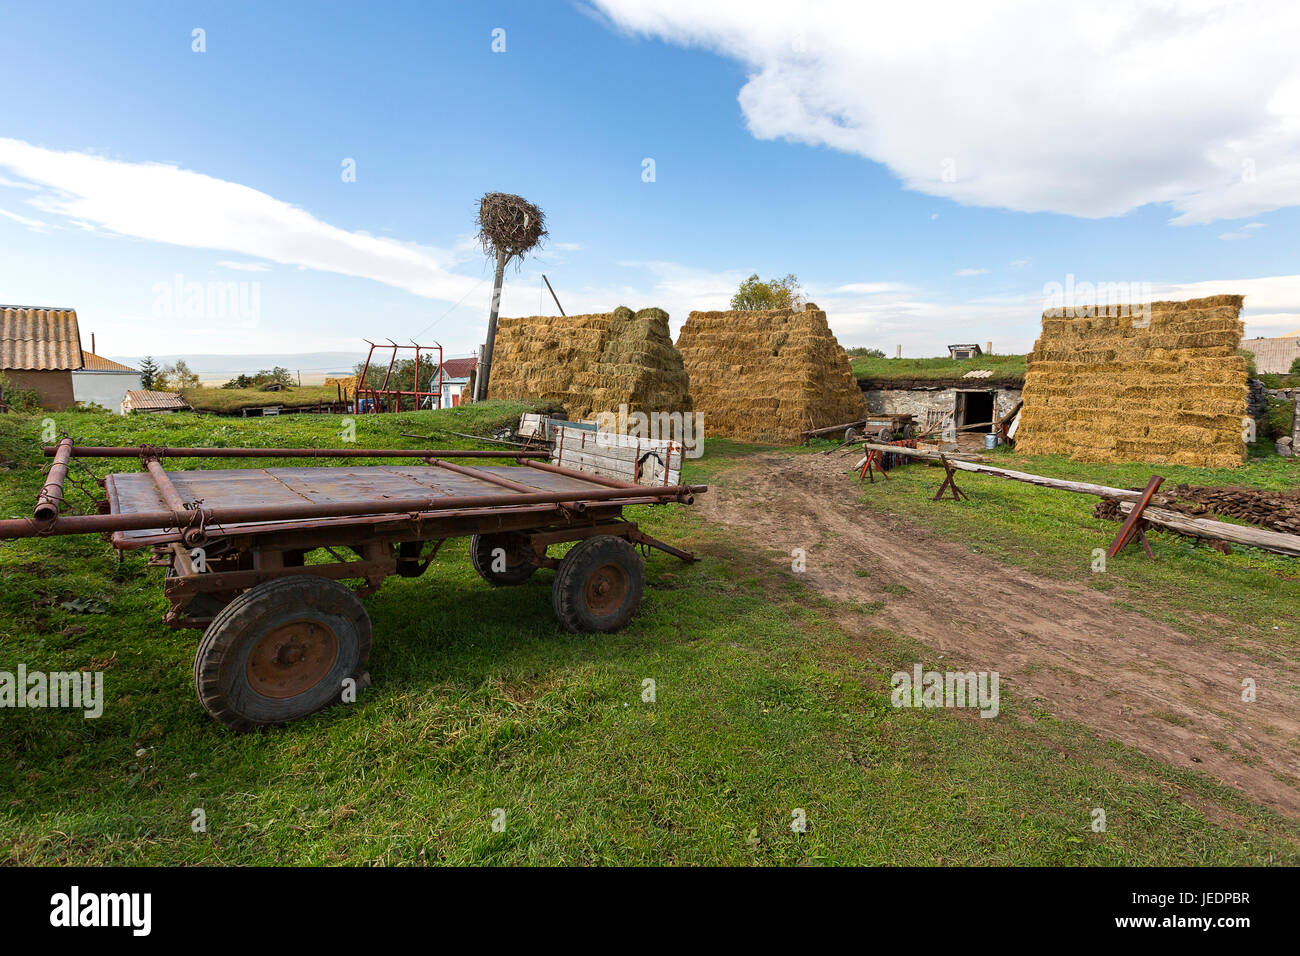 Haystack and agricultural scene in village Bokdajeni, Georgia, Caucasus. Stock Photo